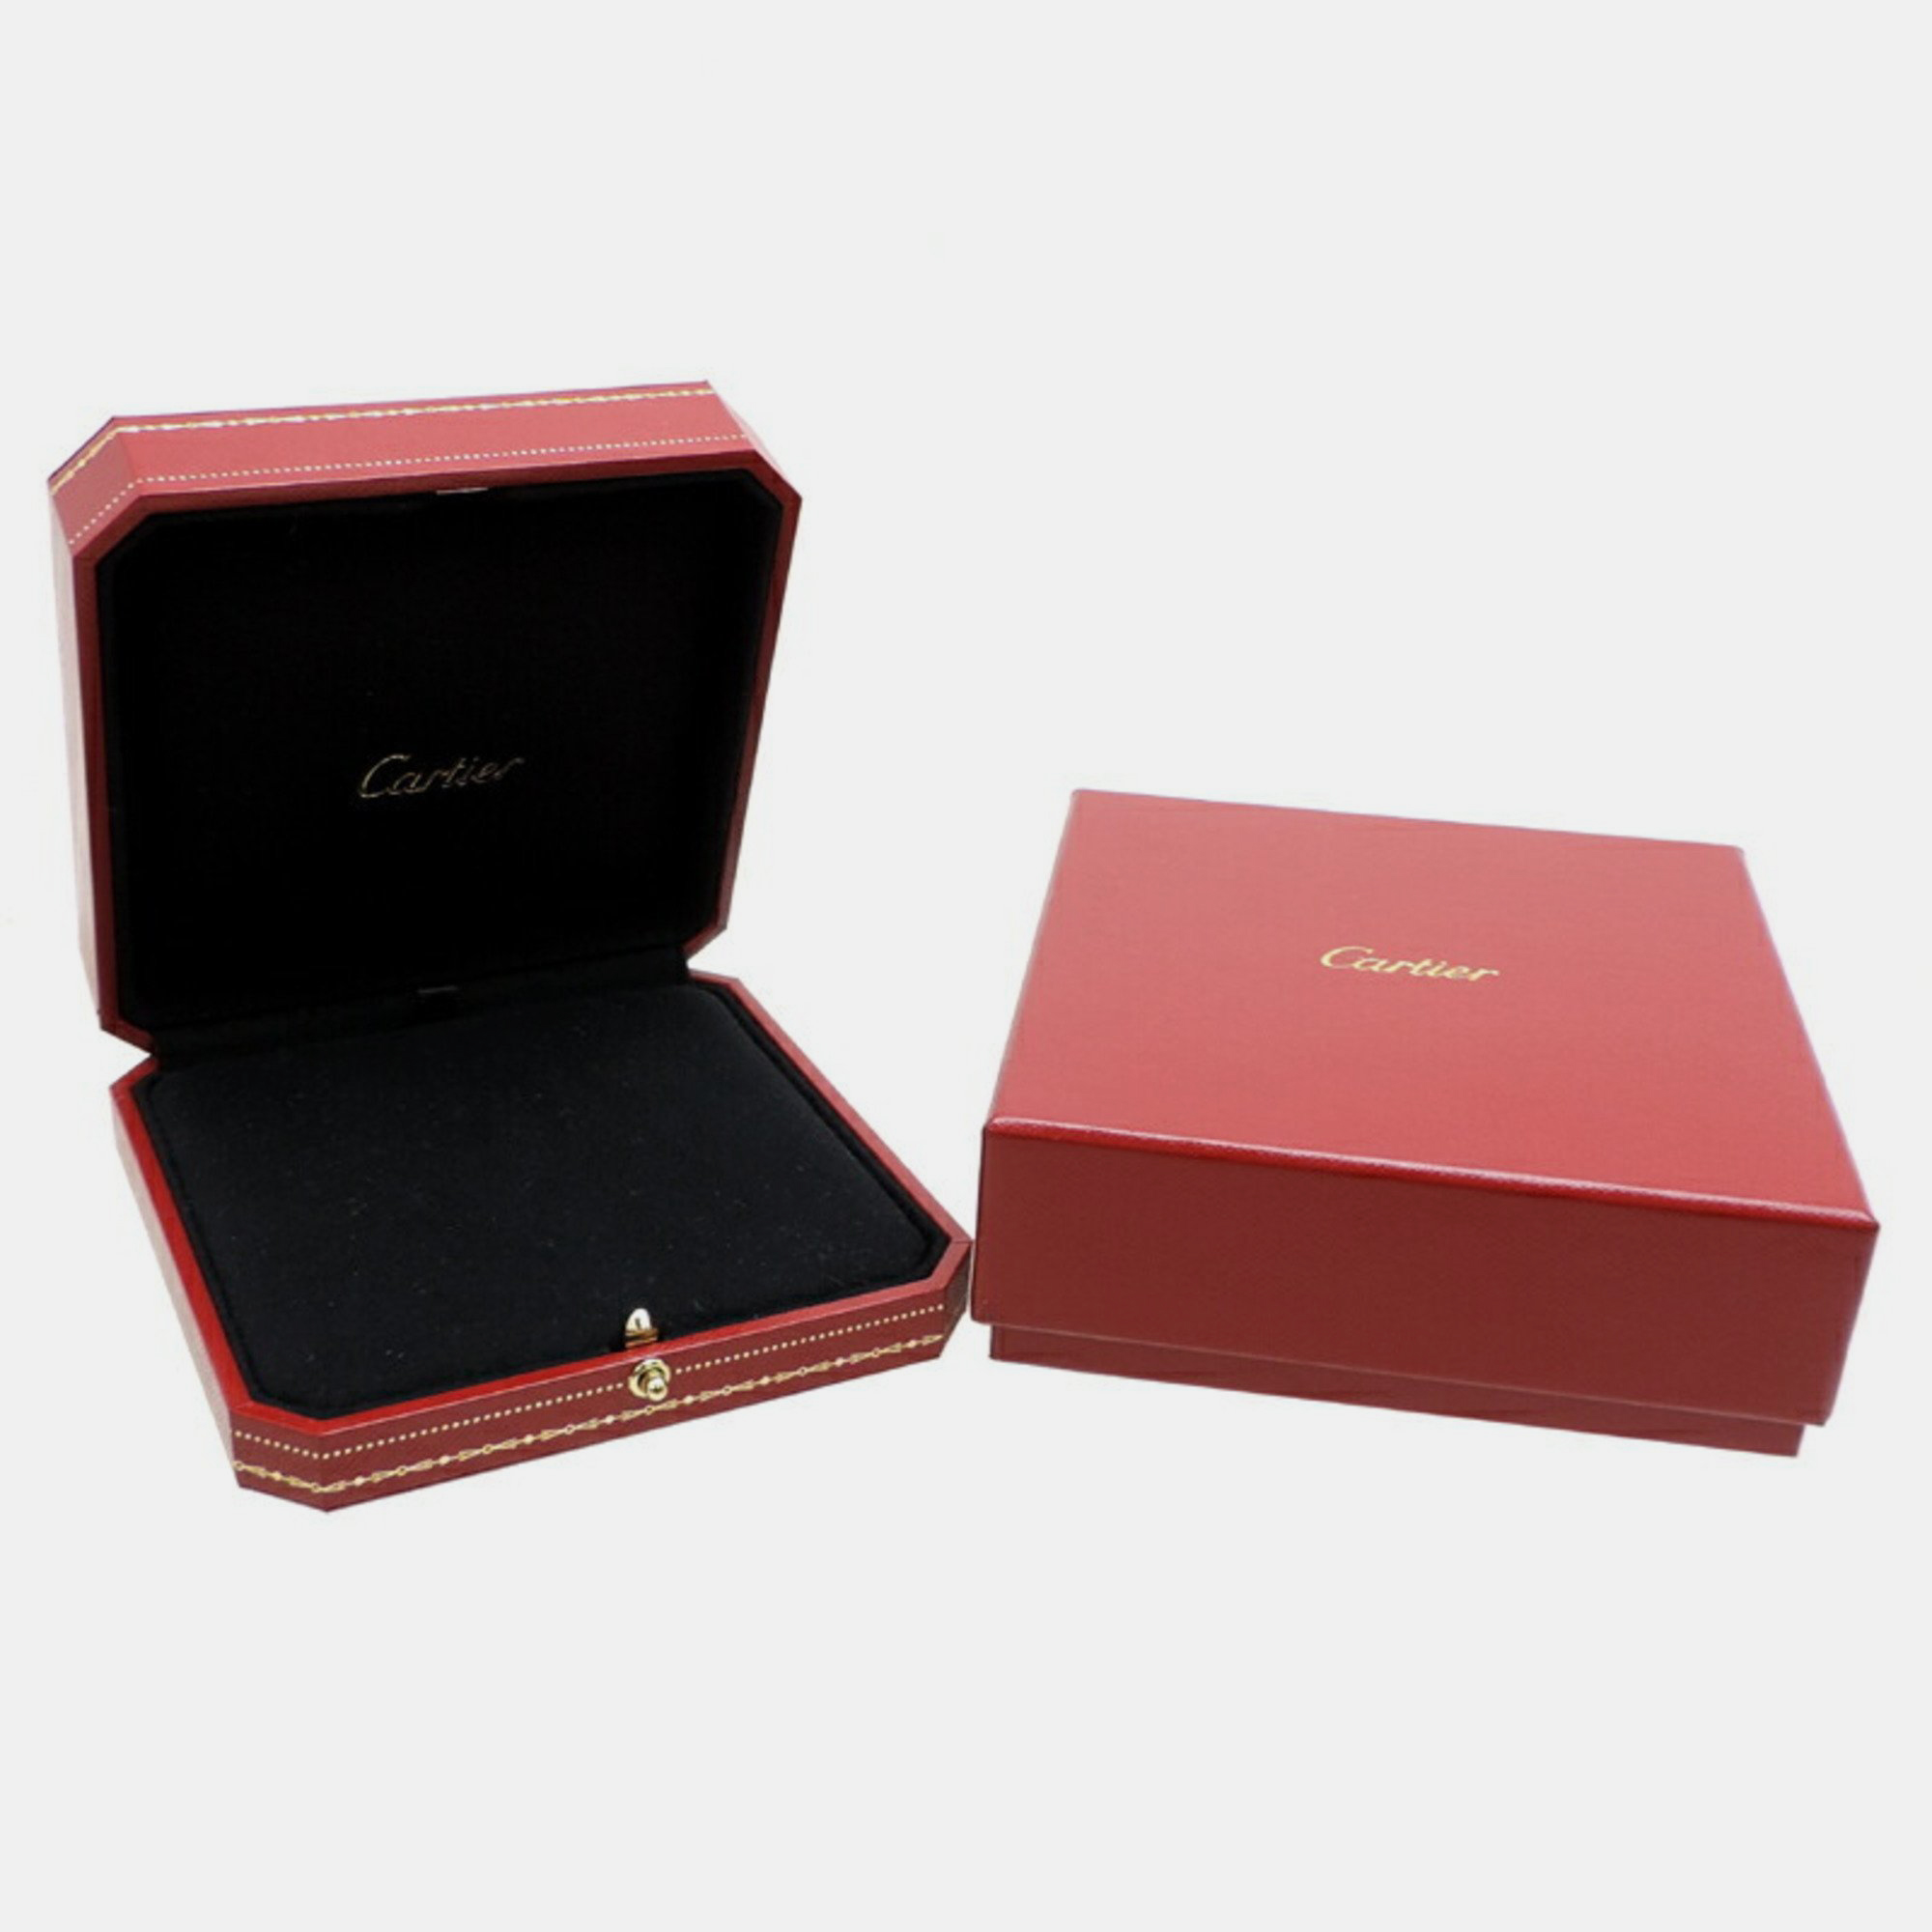 Cartier D'Amour XS 18K Rose Gold Diamond Necklace